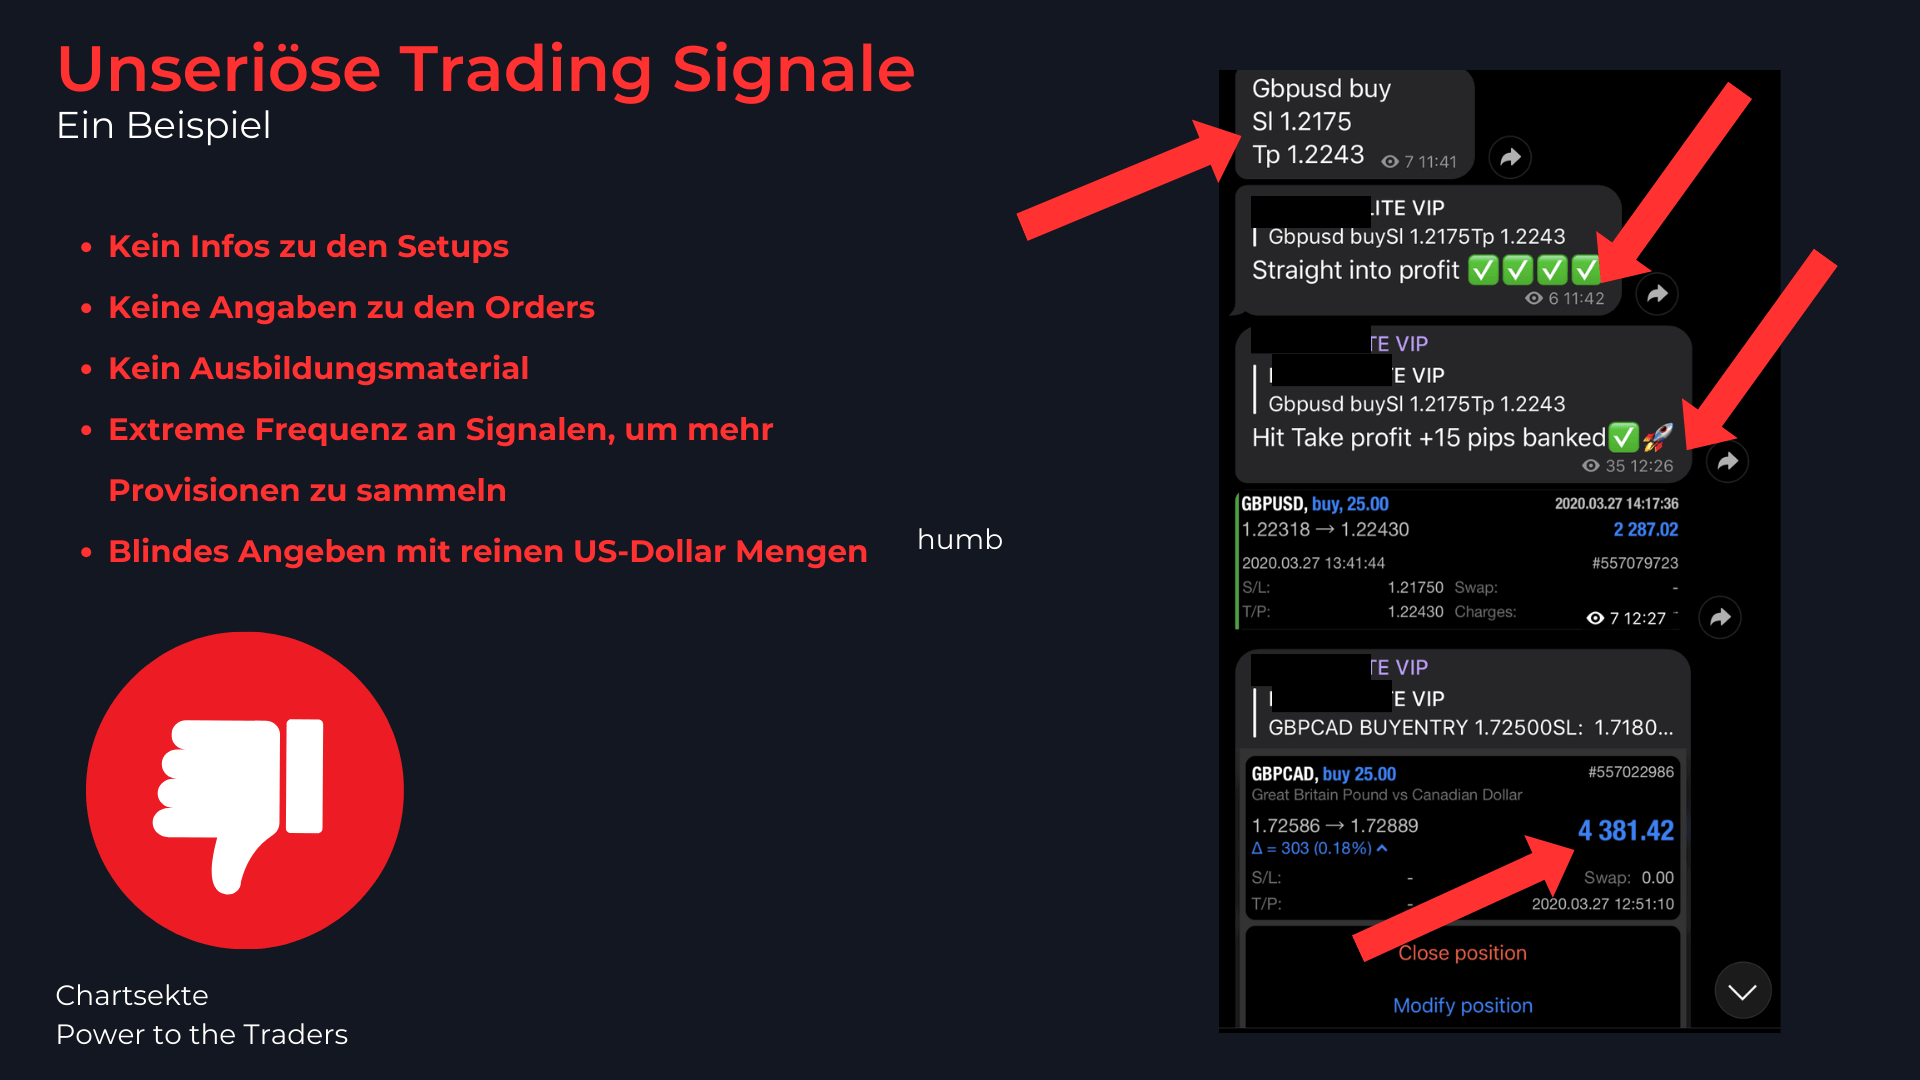 Trading Signale unseriös